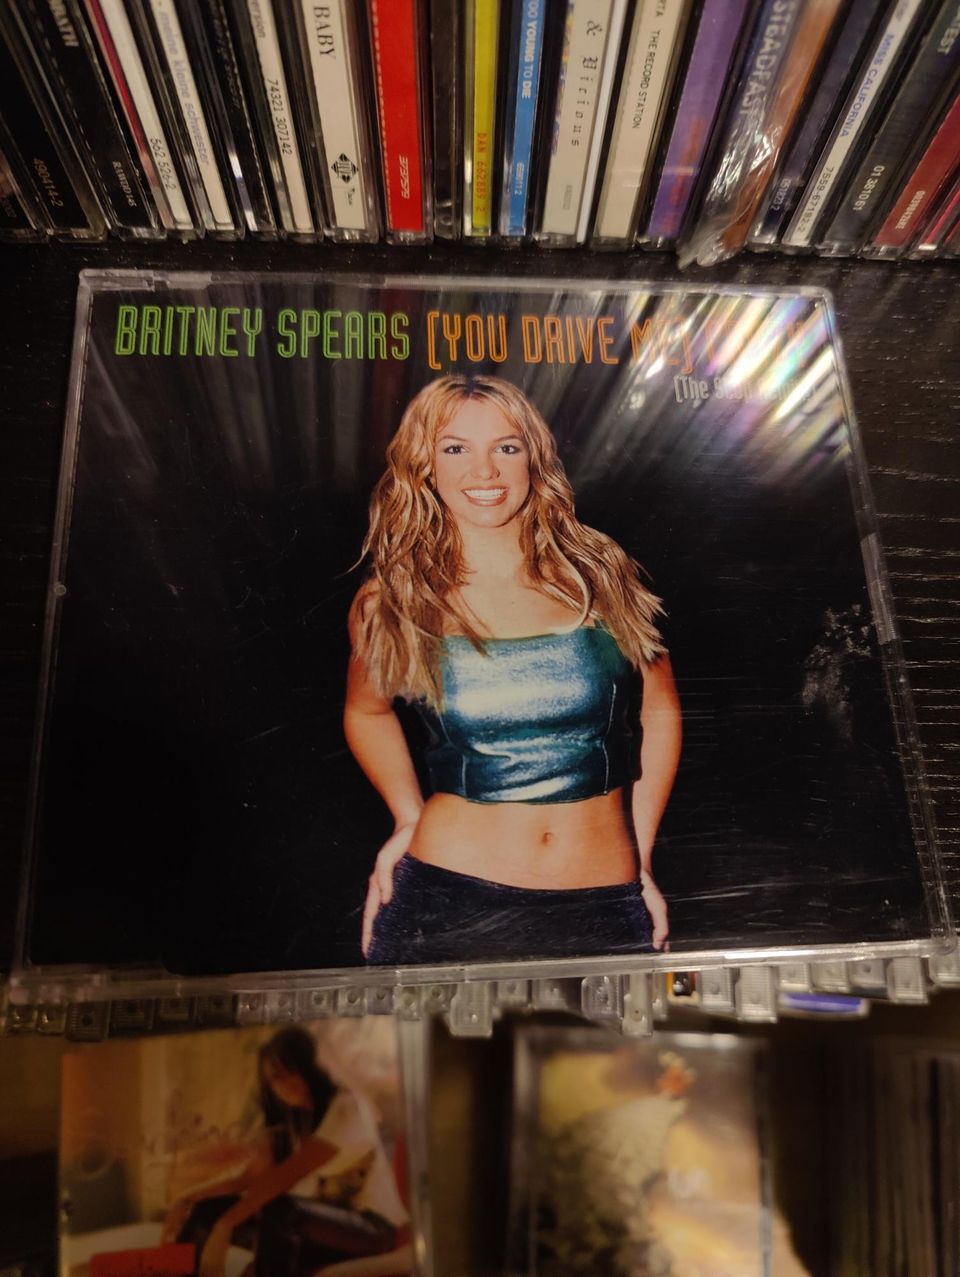 Britney Spears cds